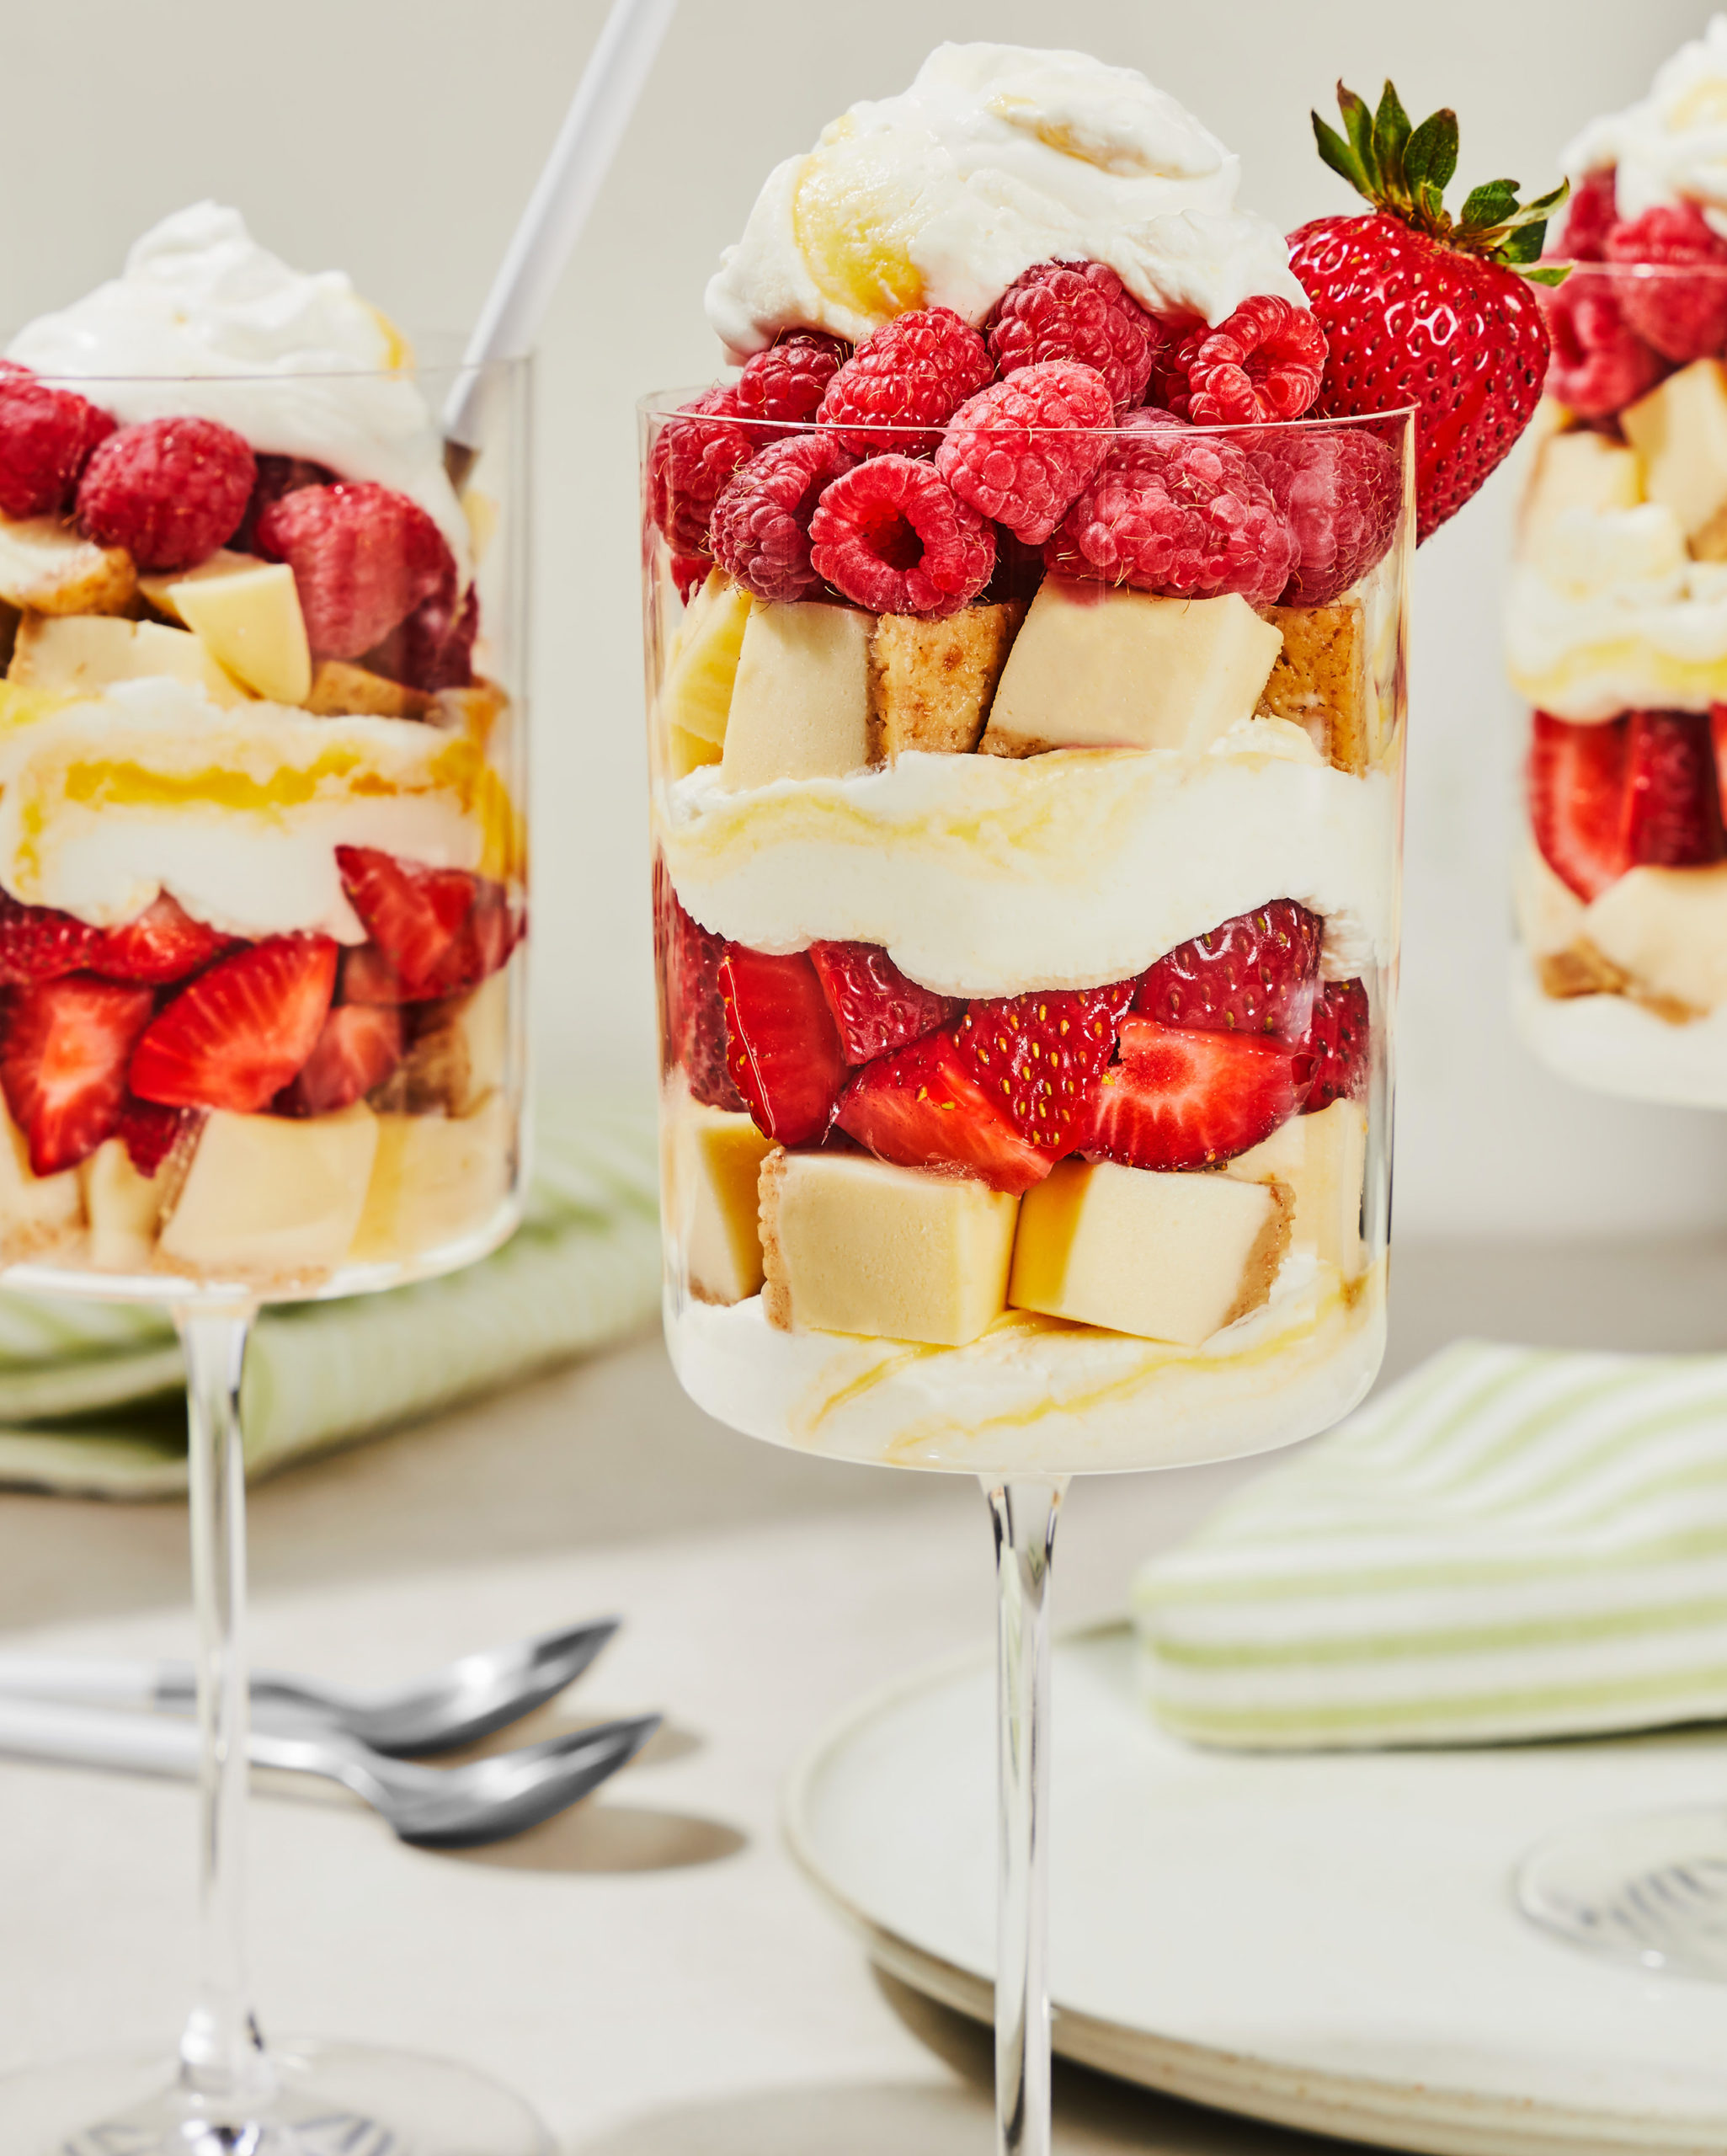 Mini cheesecake trifle with berries and cream